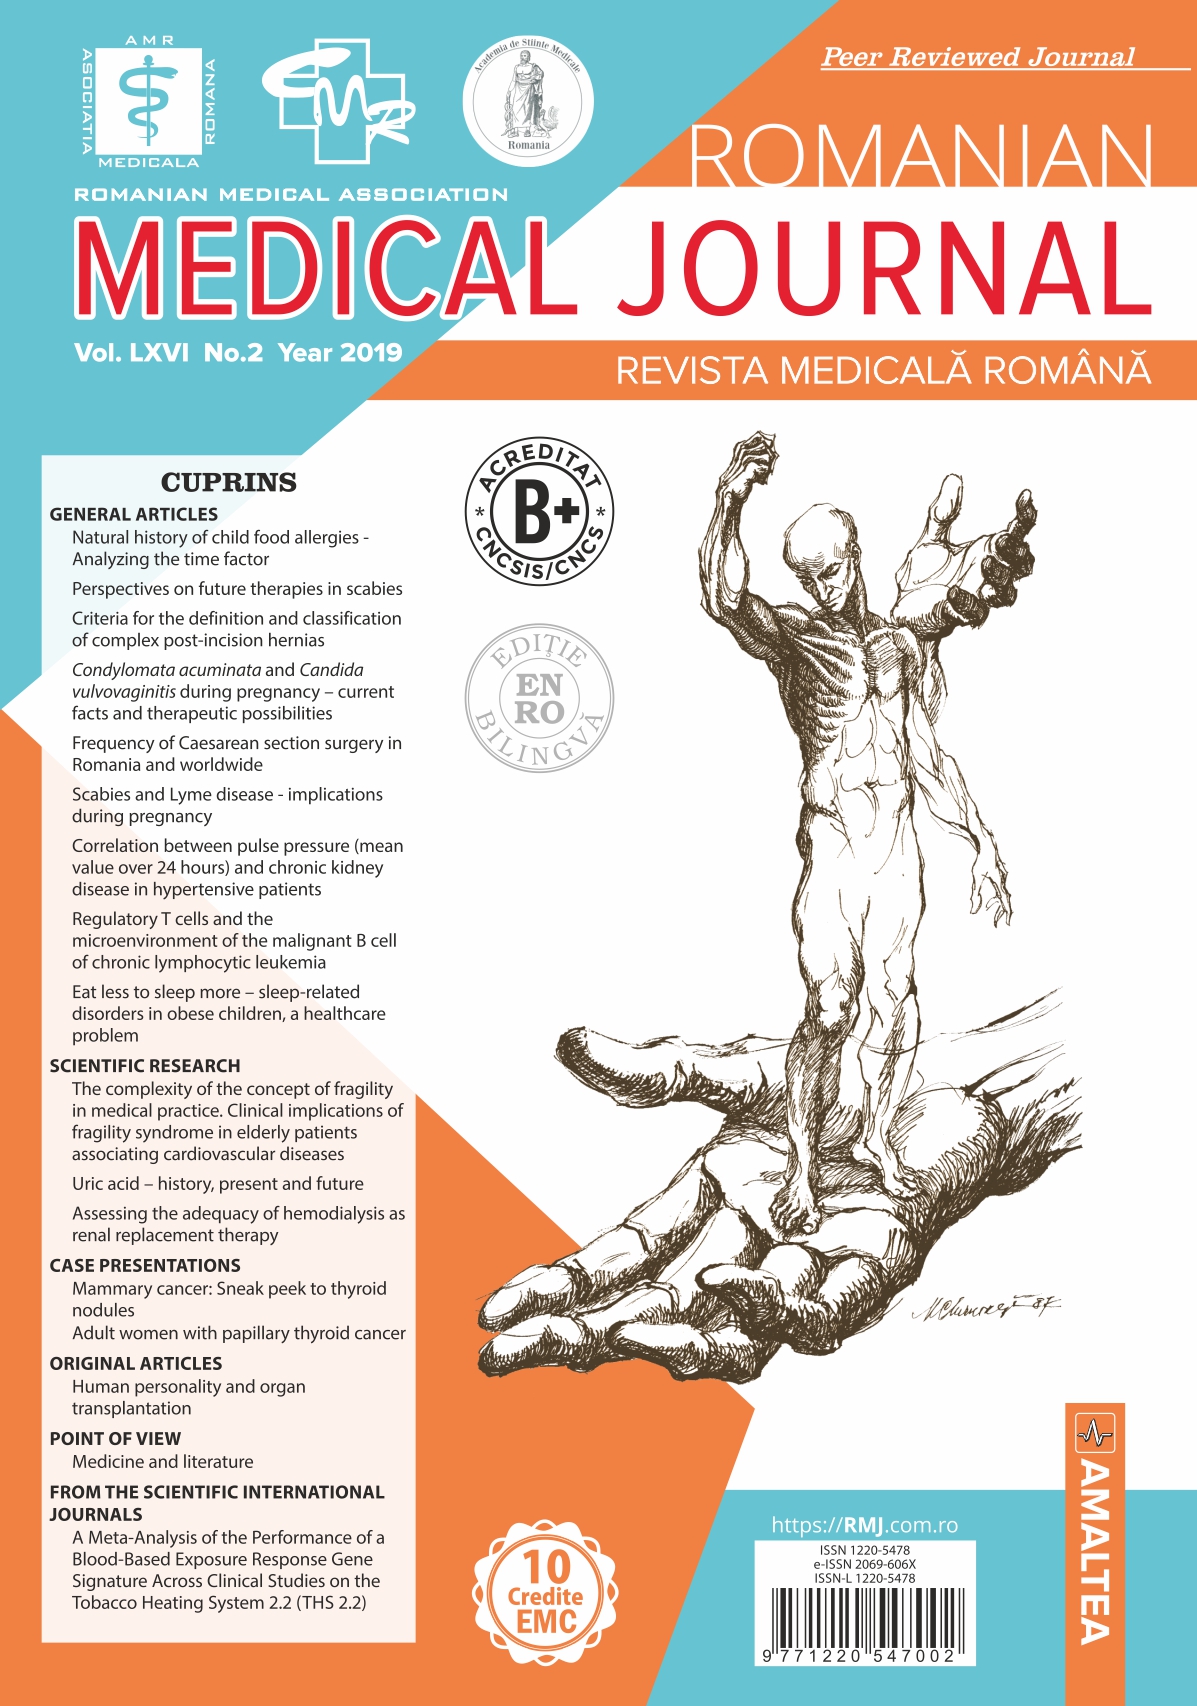 REVISTA MEDICALA ROMANA - Romanian Medical Journal, Vol. LXVI, No. 2, Year 2019